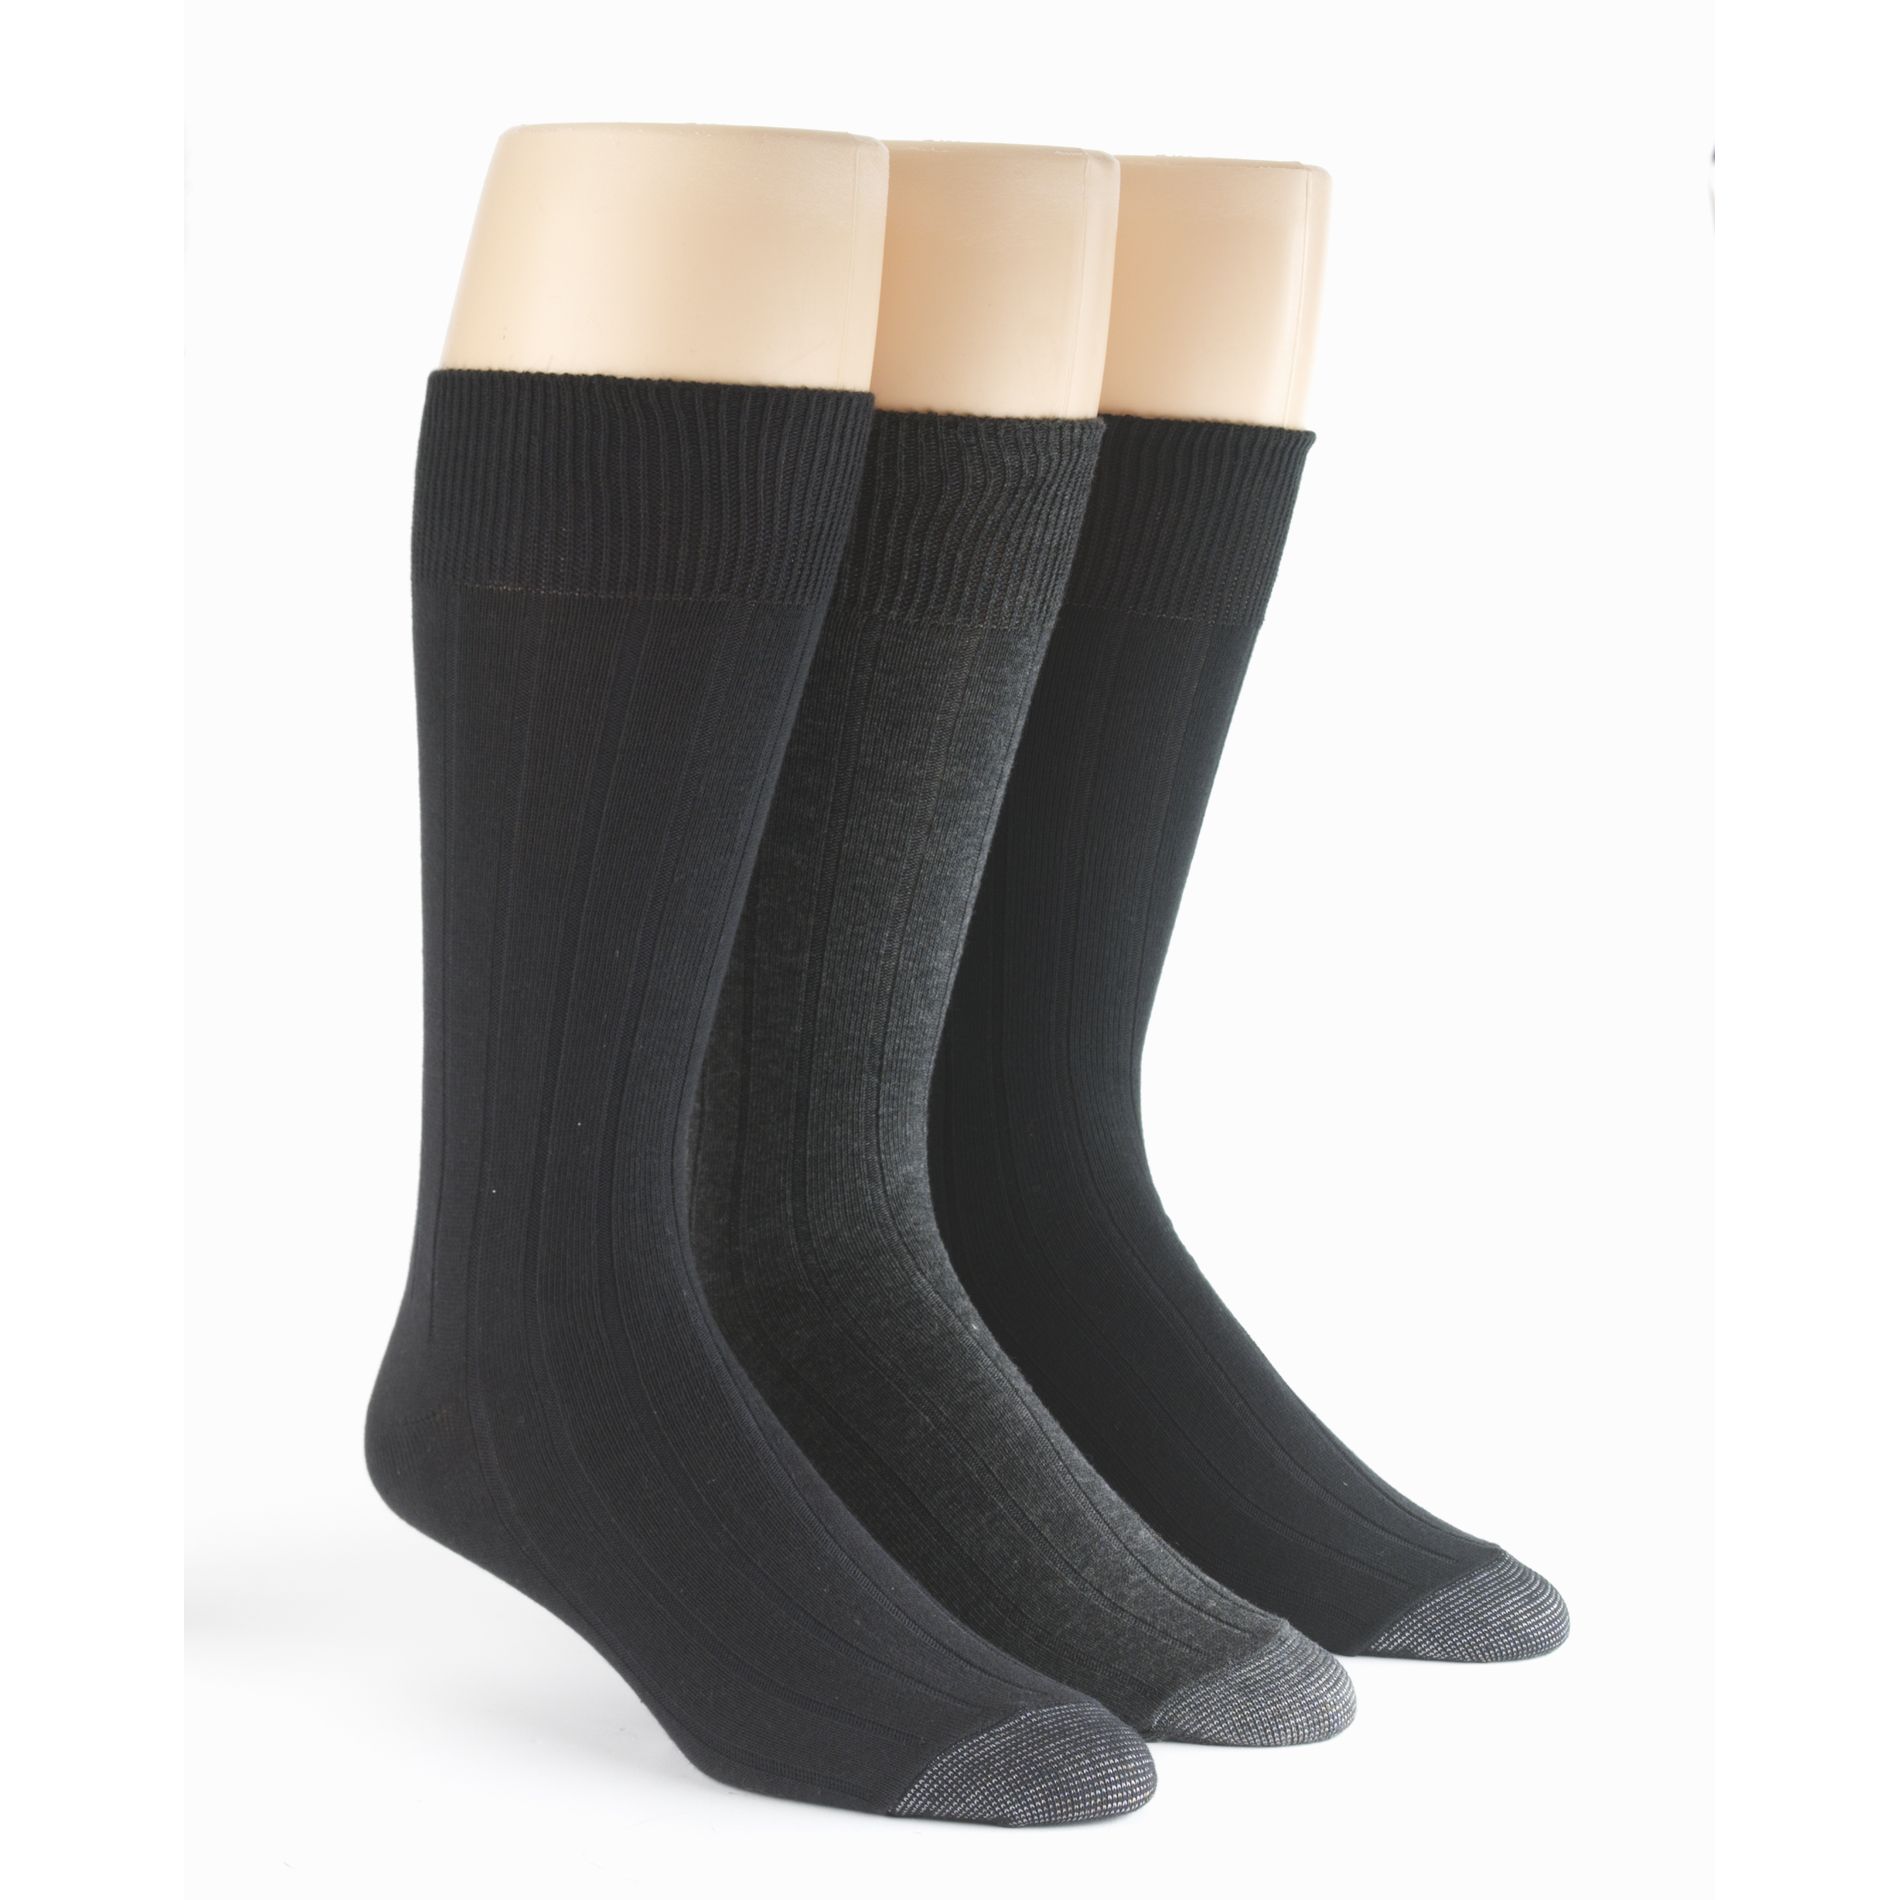 Silvertoe Wide Rib Cotton Socks - 3 pack